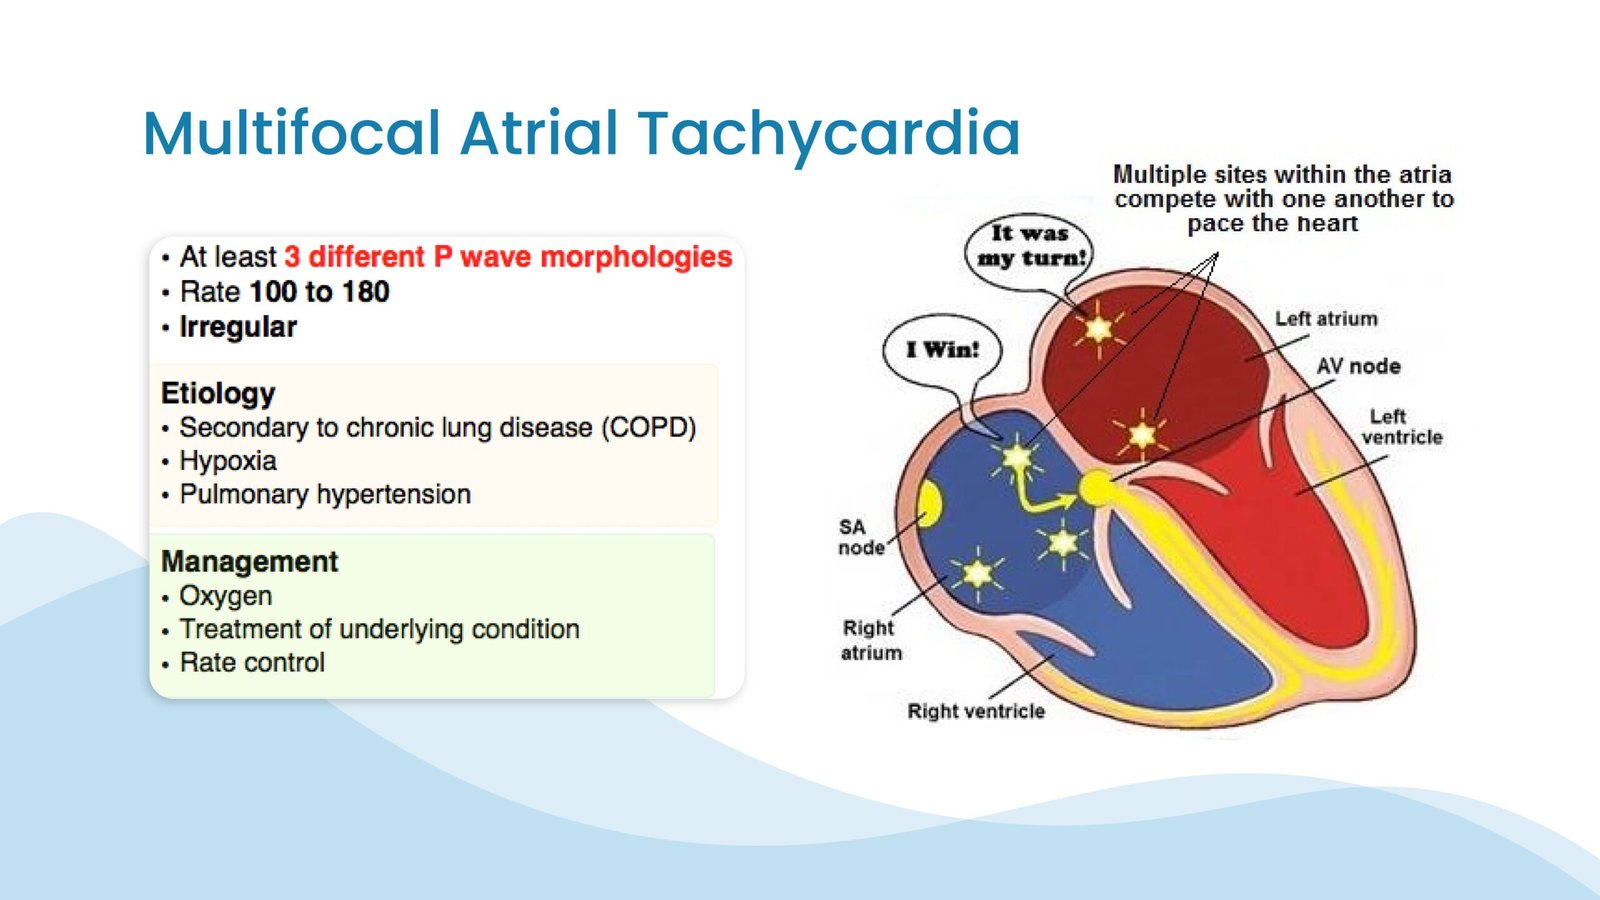 Multifocal Atrial Tachycardia